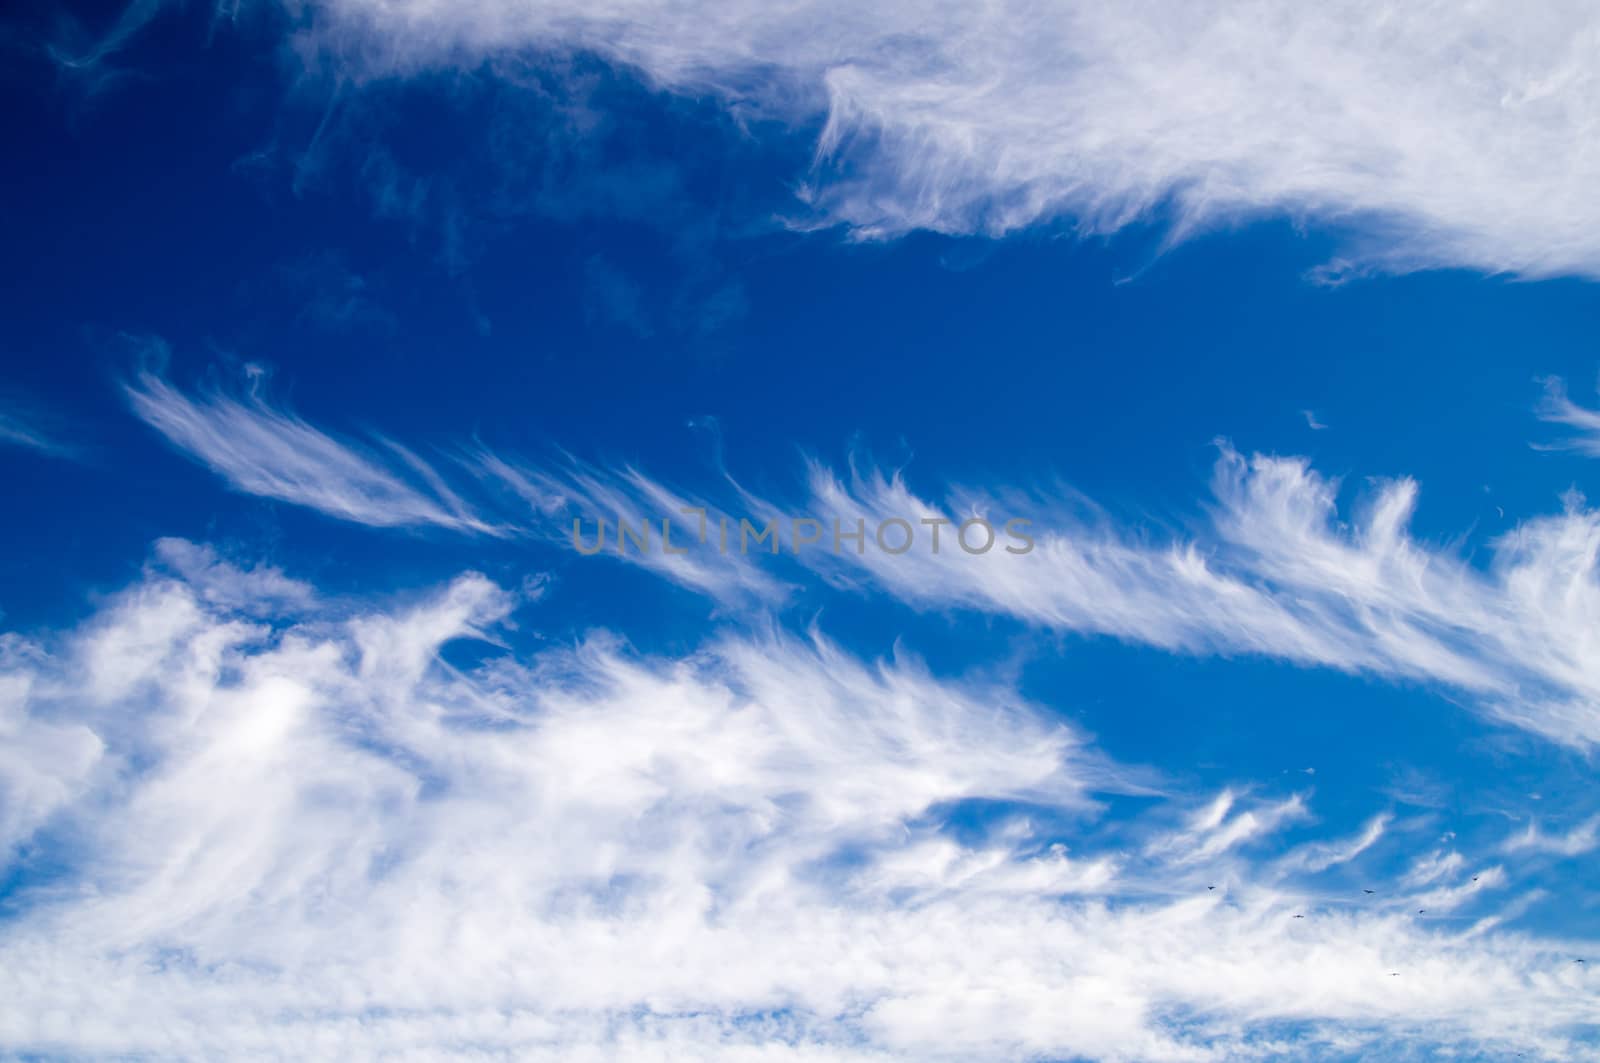 Clouds sailing through the blue sky by emattil